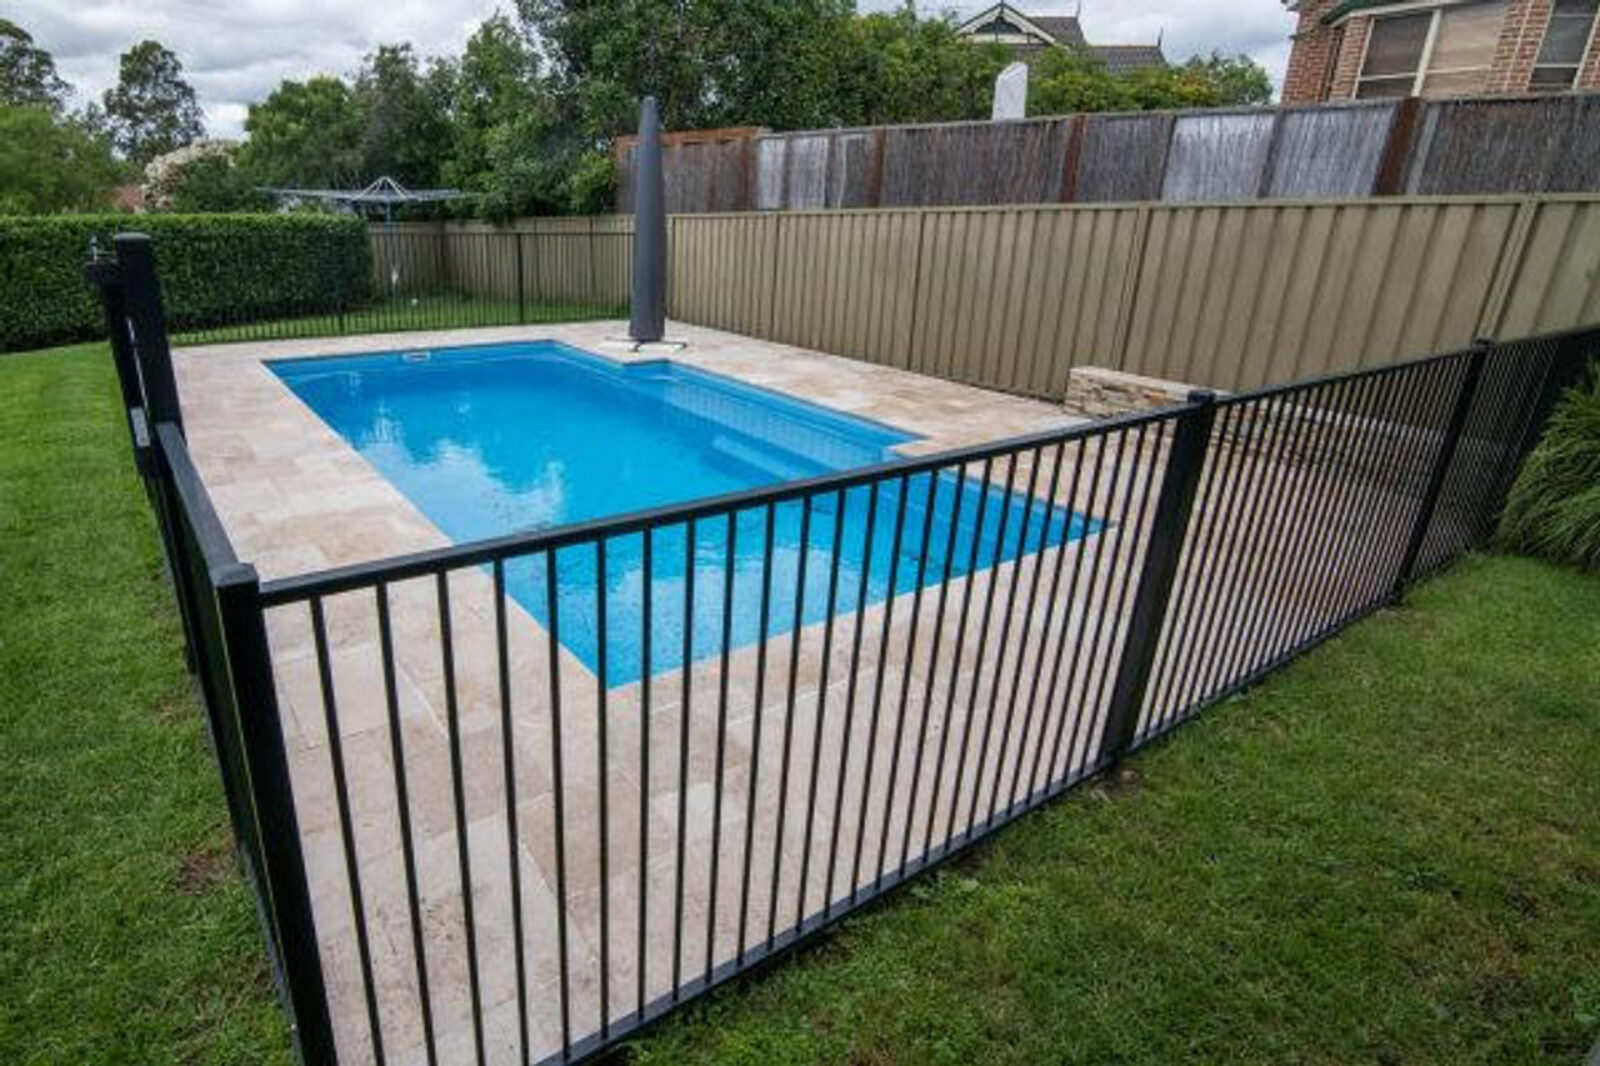 Barriere de securite pour piscine en metal